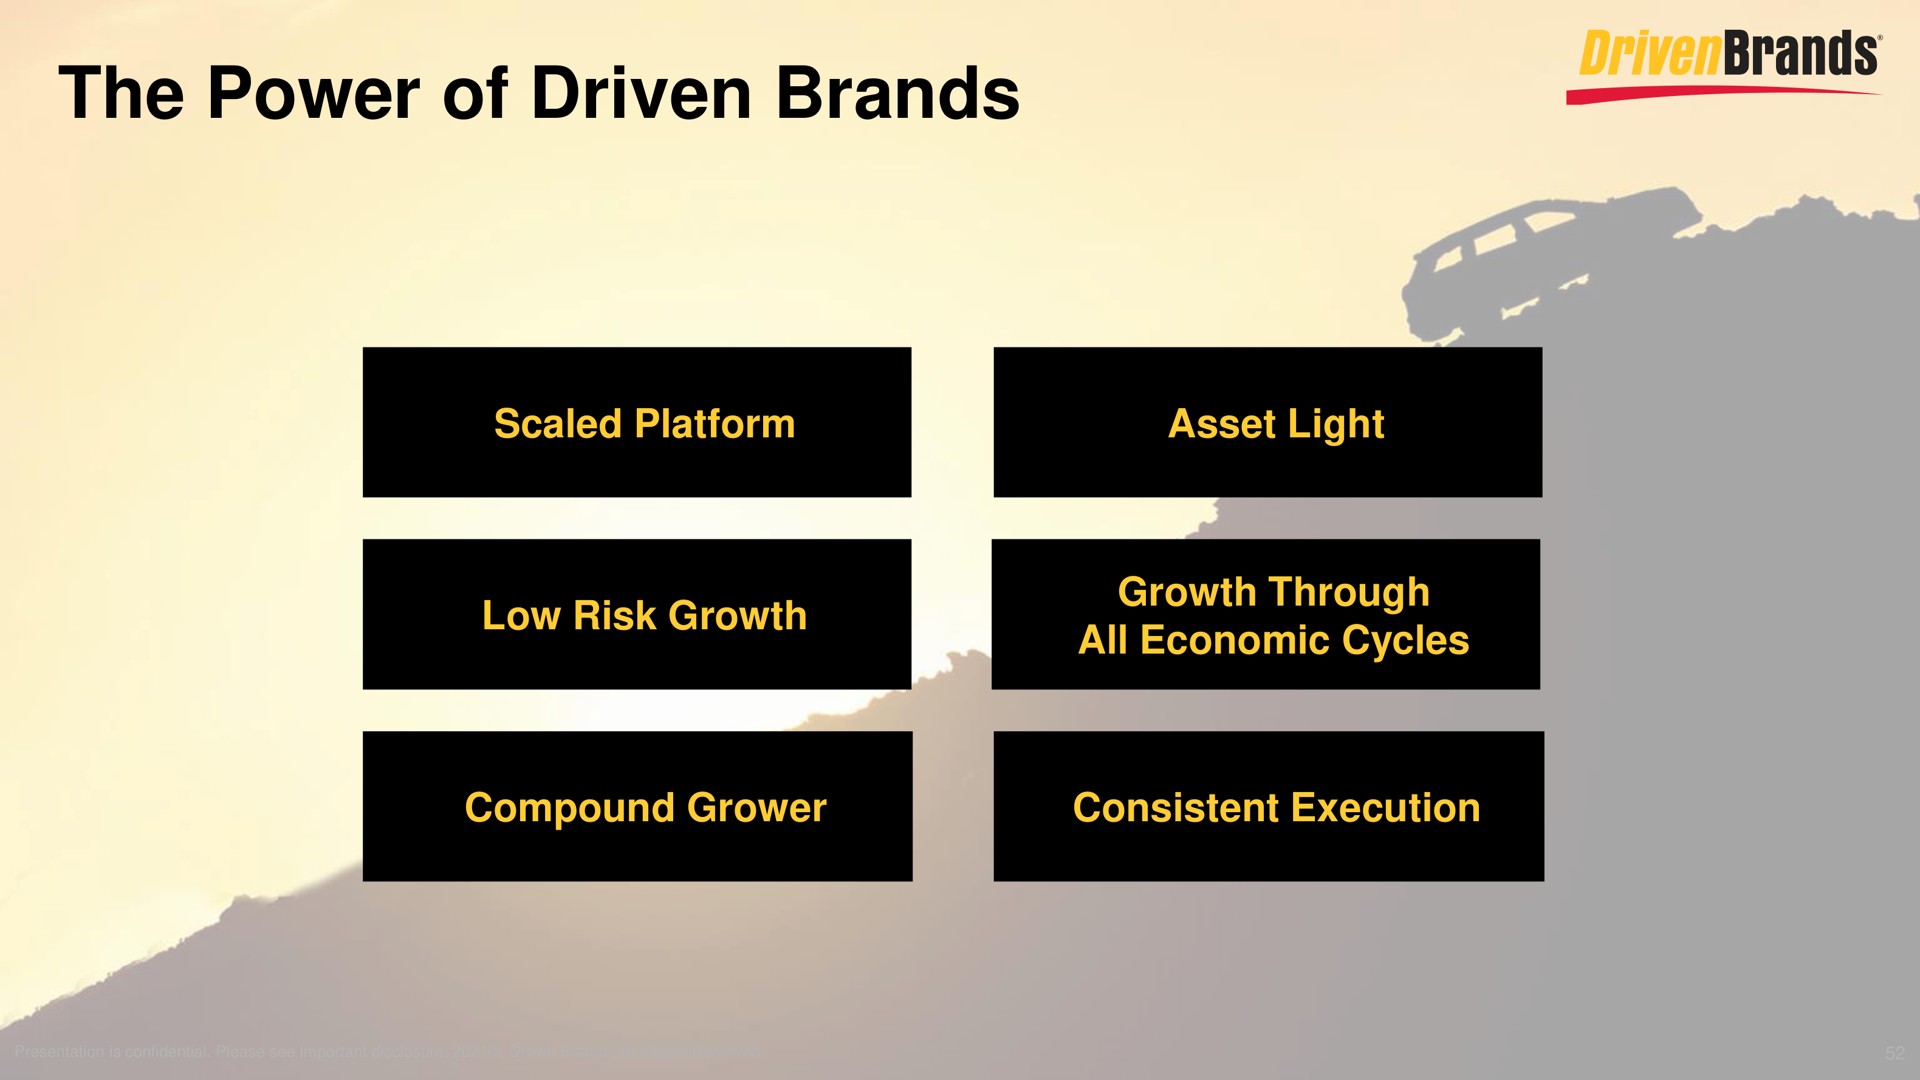 the power of driven brands rains | DrivenBrands